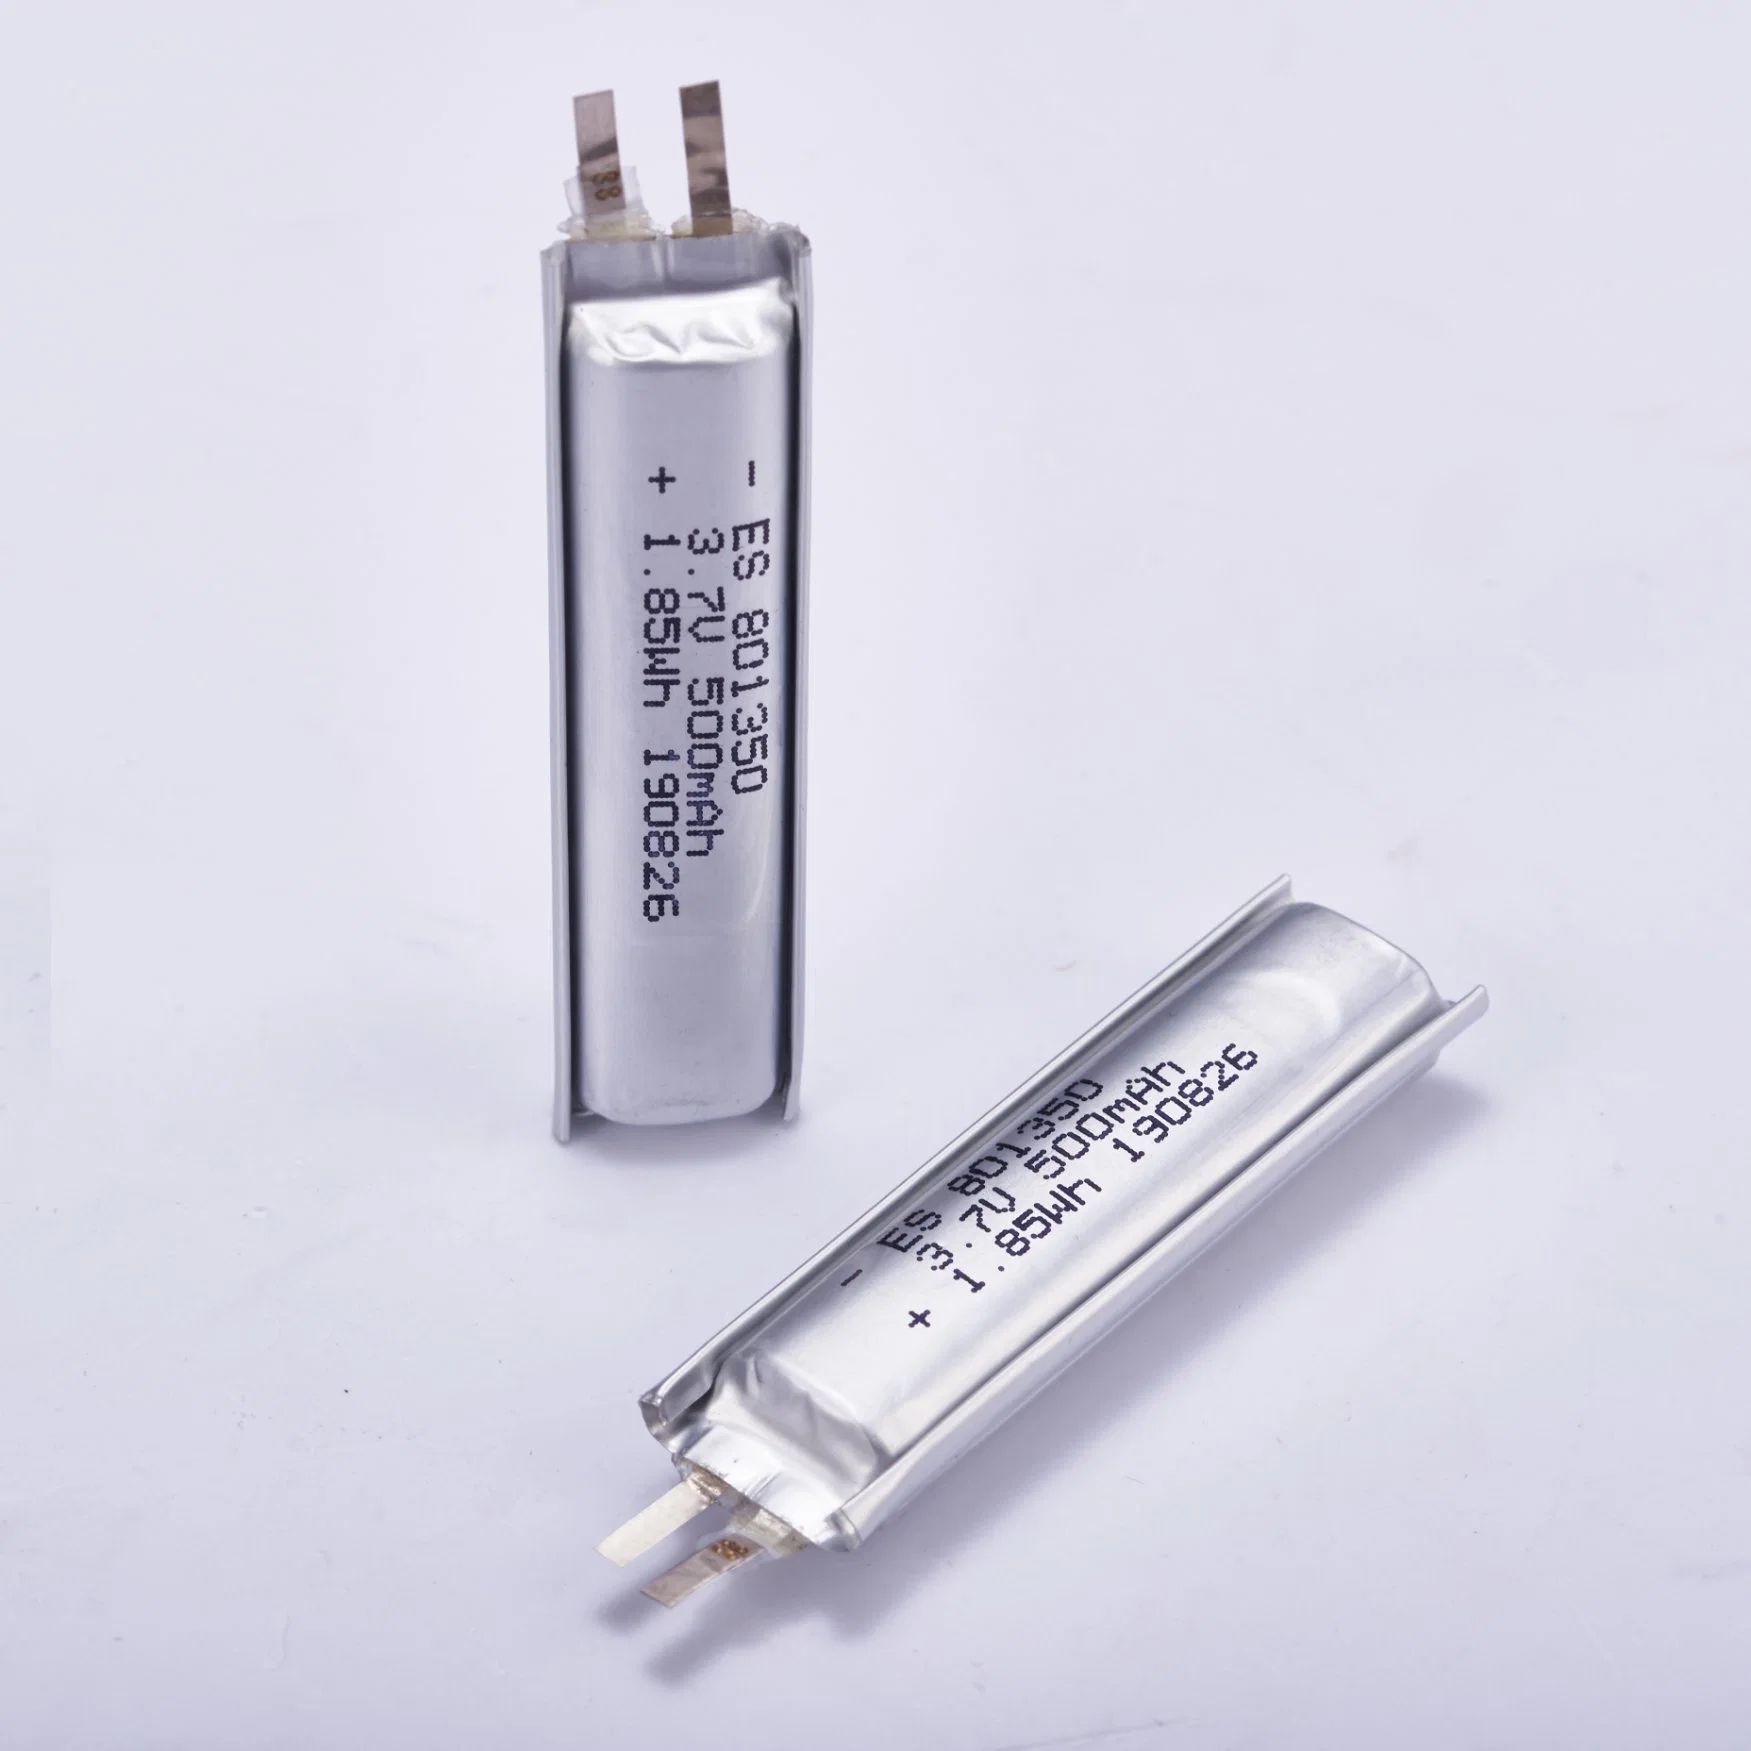 801350 Lithium Battery 3.7V 500mAh Rechargeable Li Polymer Battery for Medical Equipment